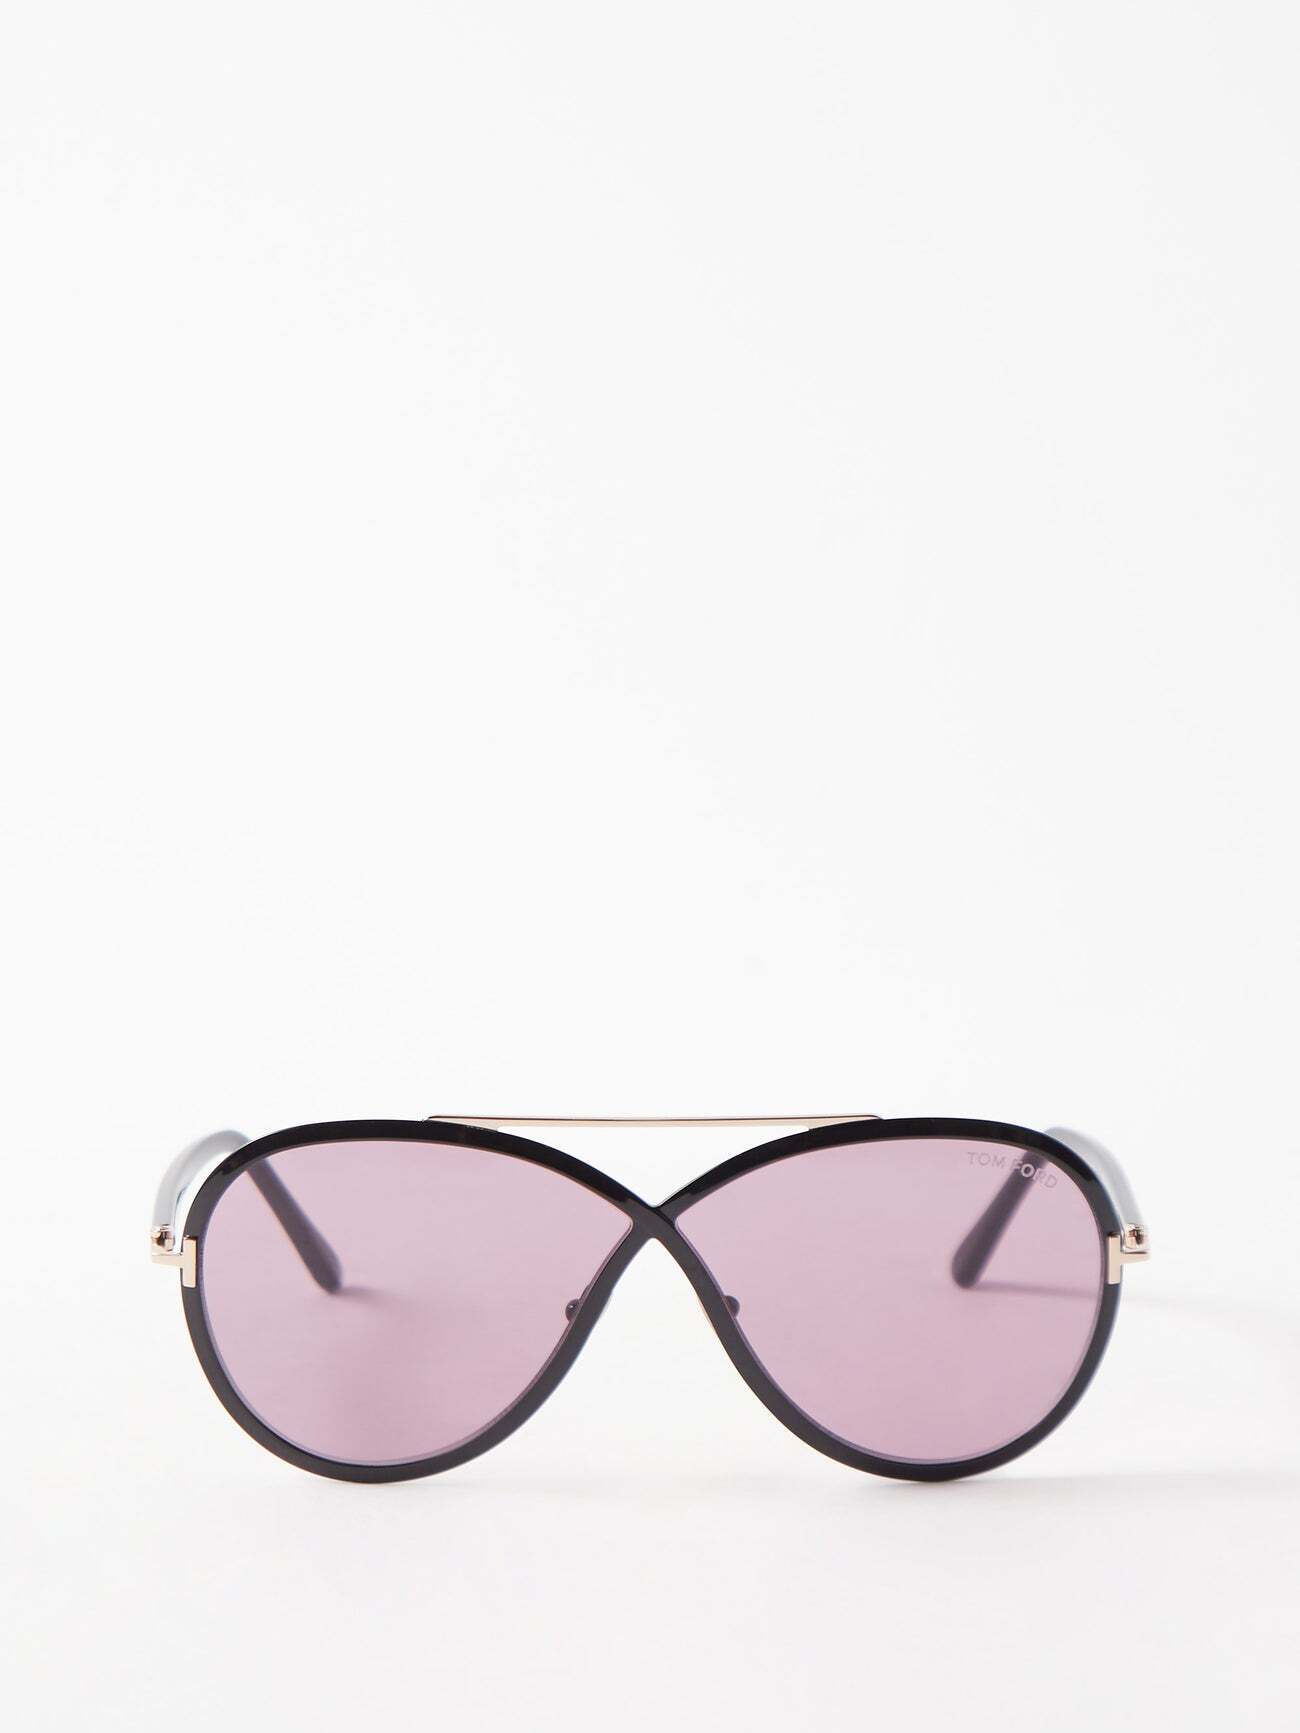 Tom Ford Eyewear - Rickie Metal Oversized Aviator Sunglasses - Womens - Black Purple